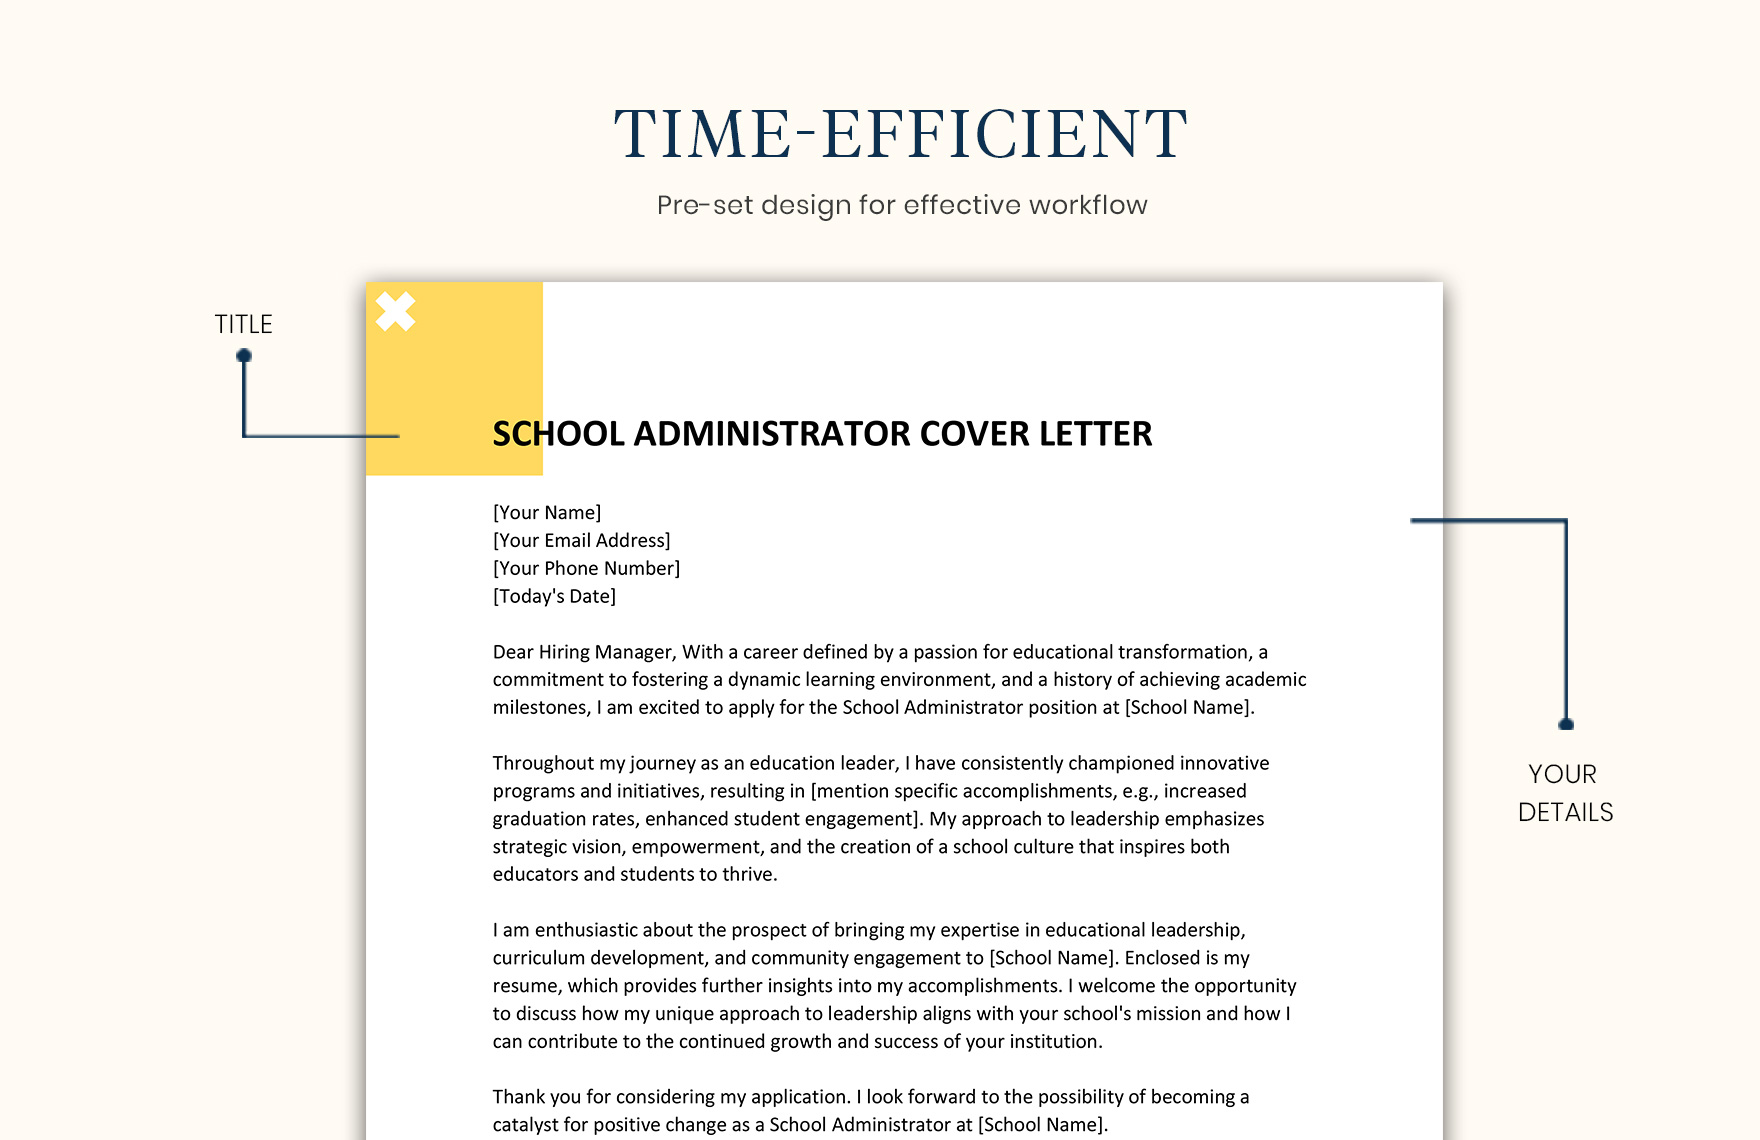 School Administrator Cover Letter